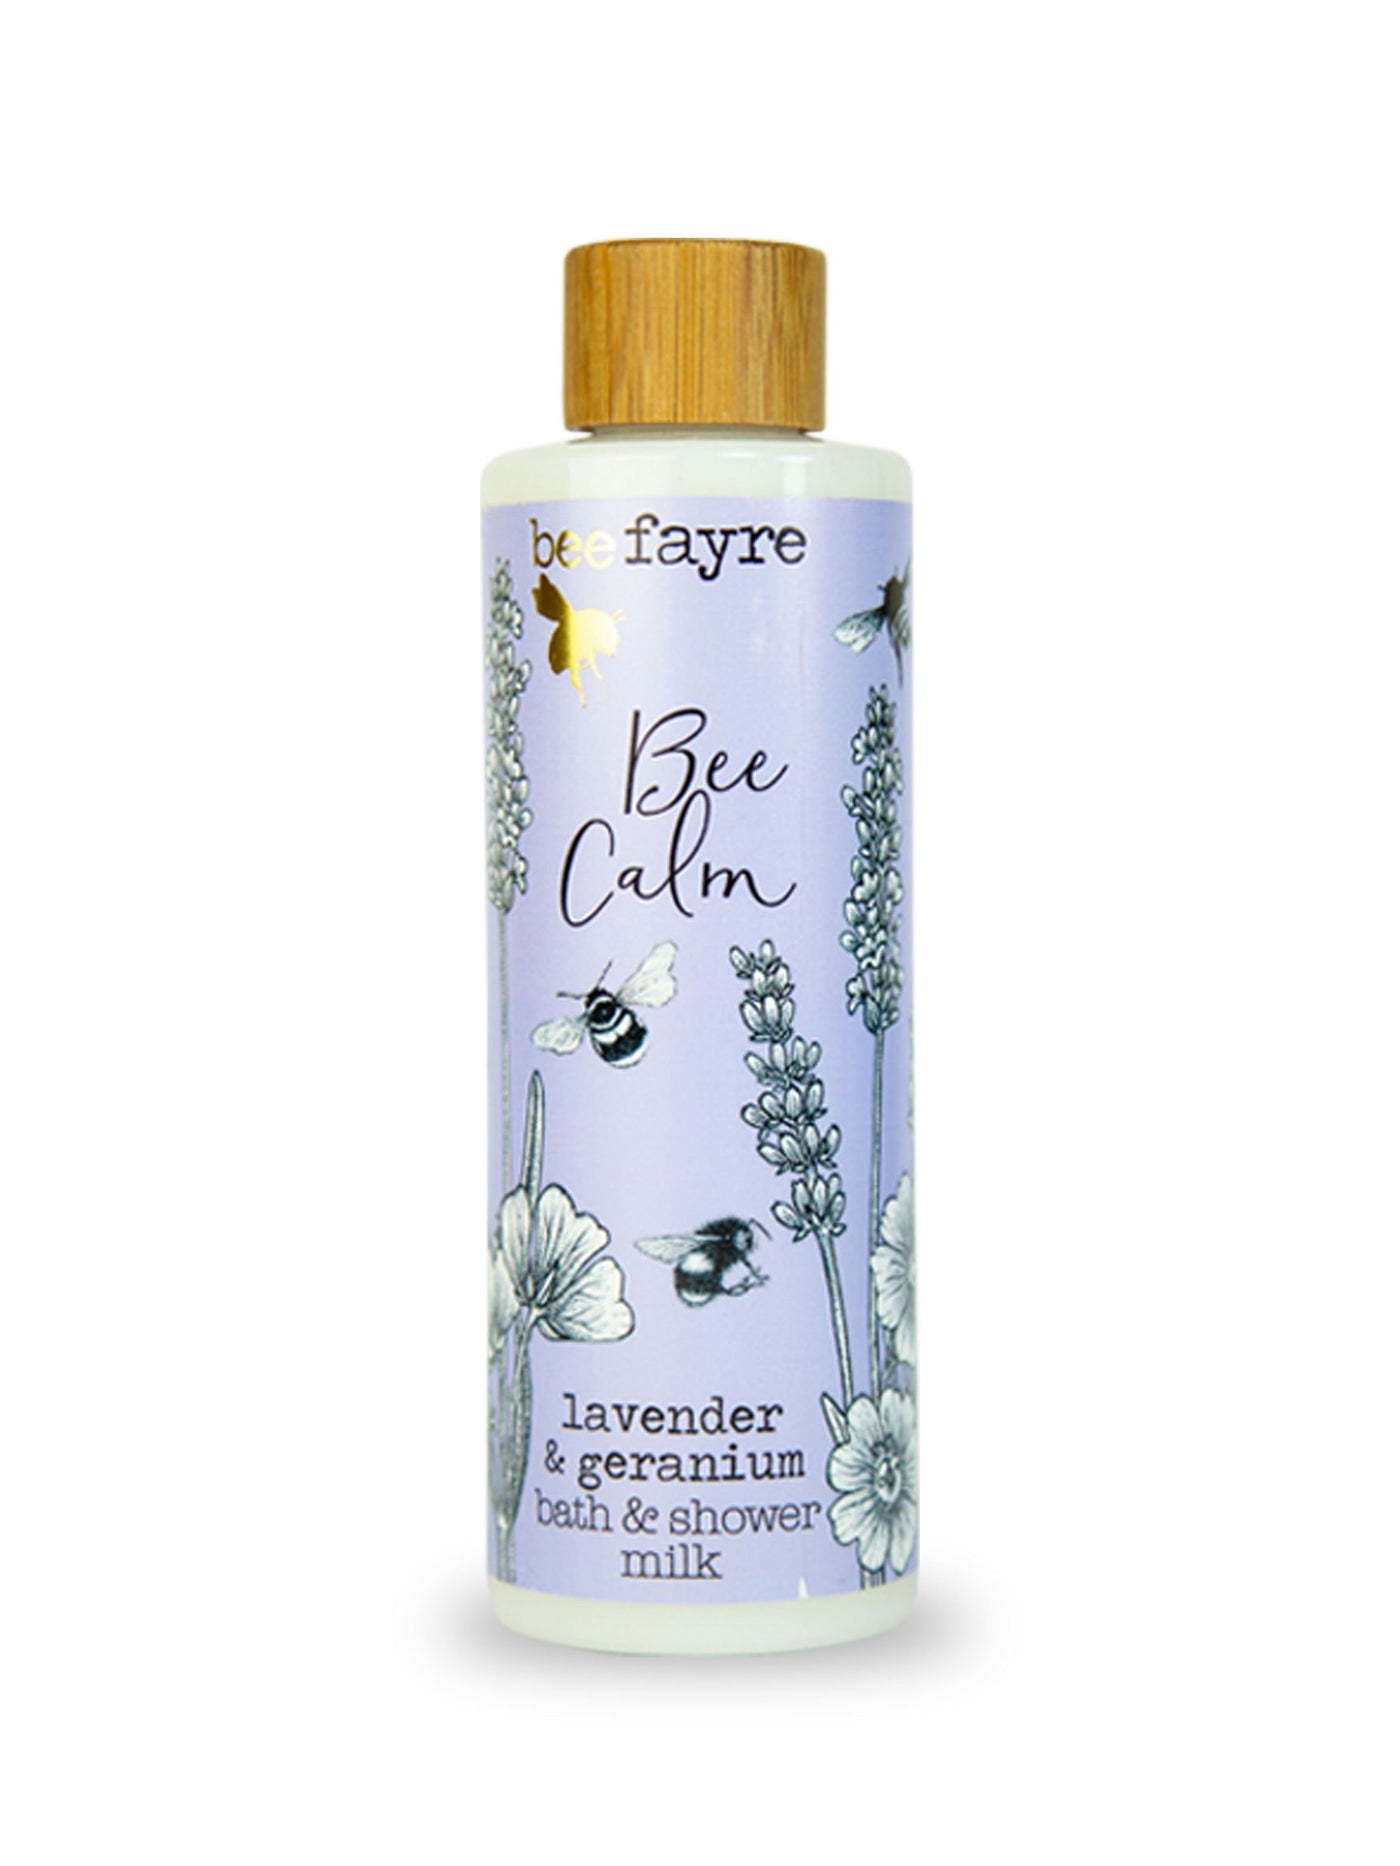 Beefayre Bee Calm- Lavender & Geranium Bath & Shower Milk 250ml